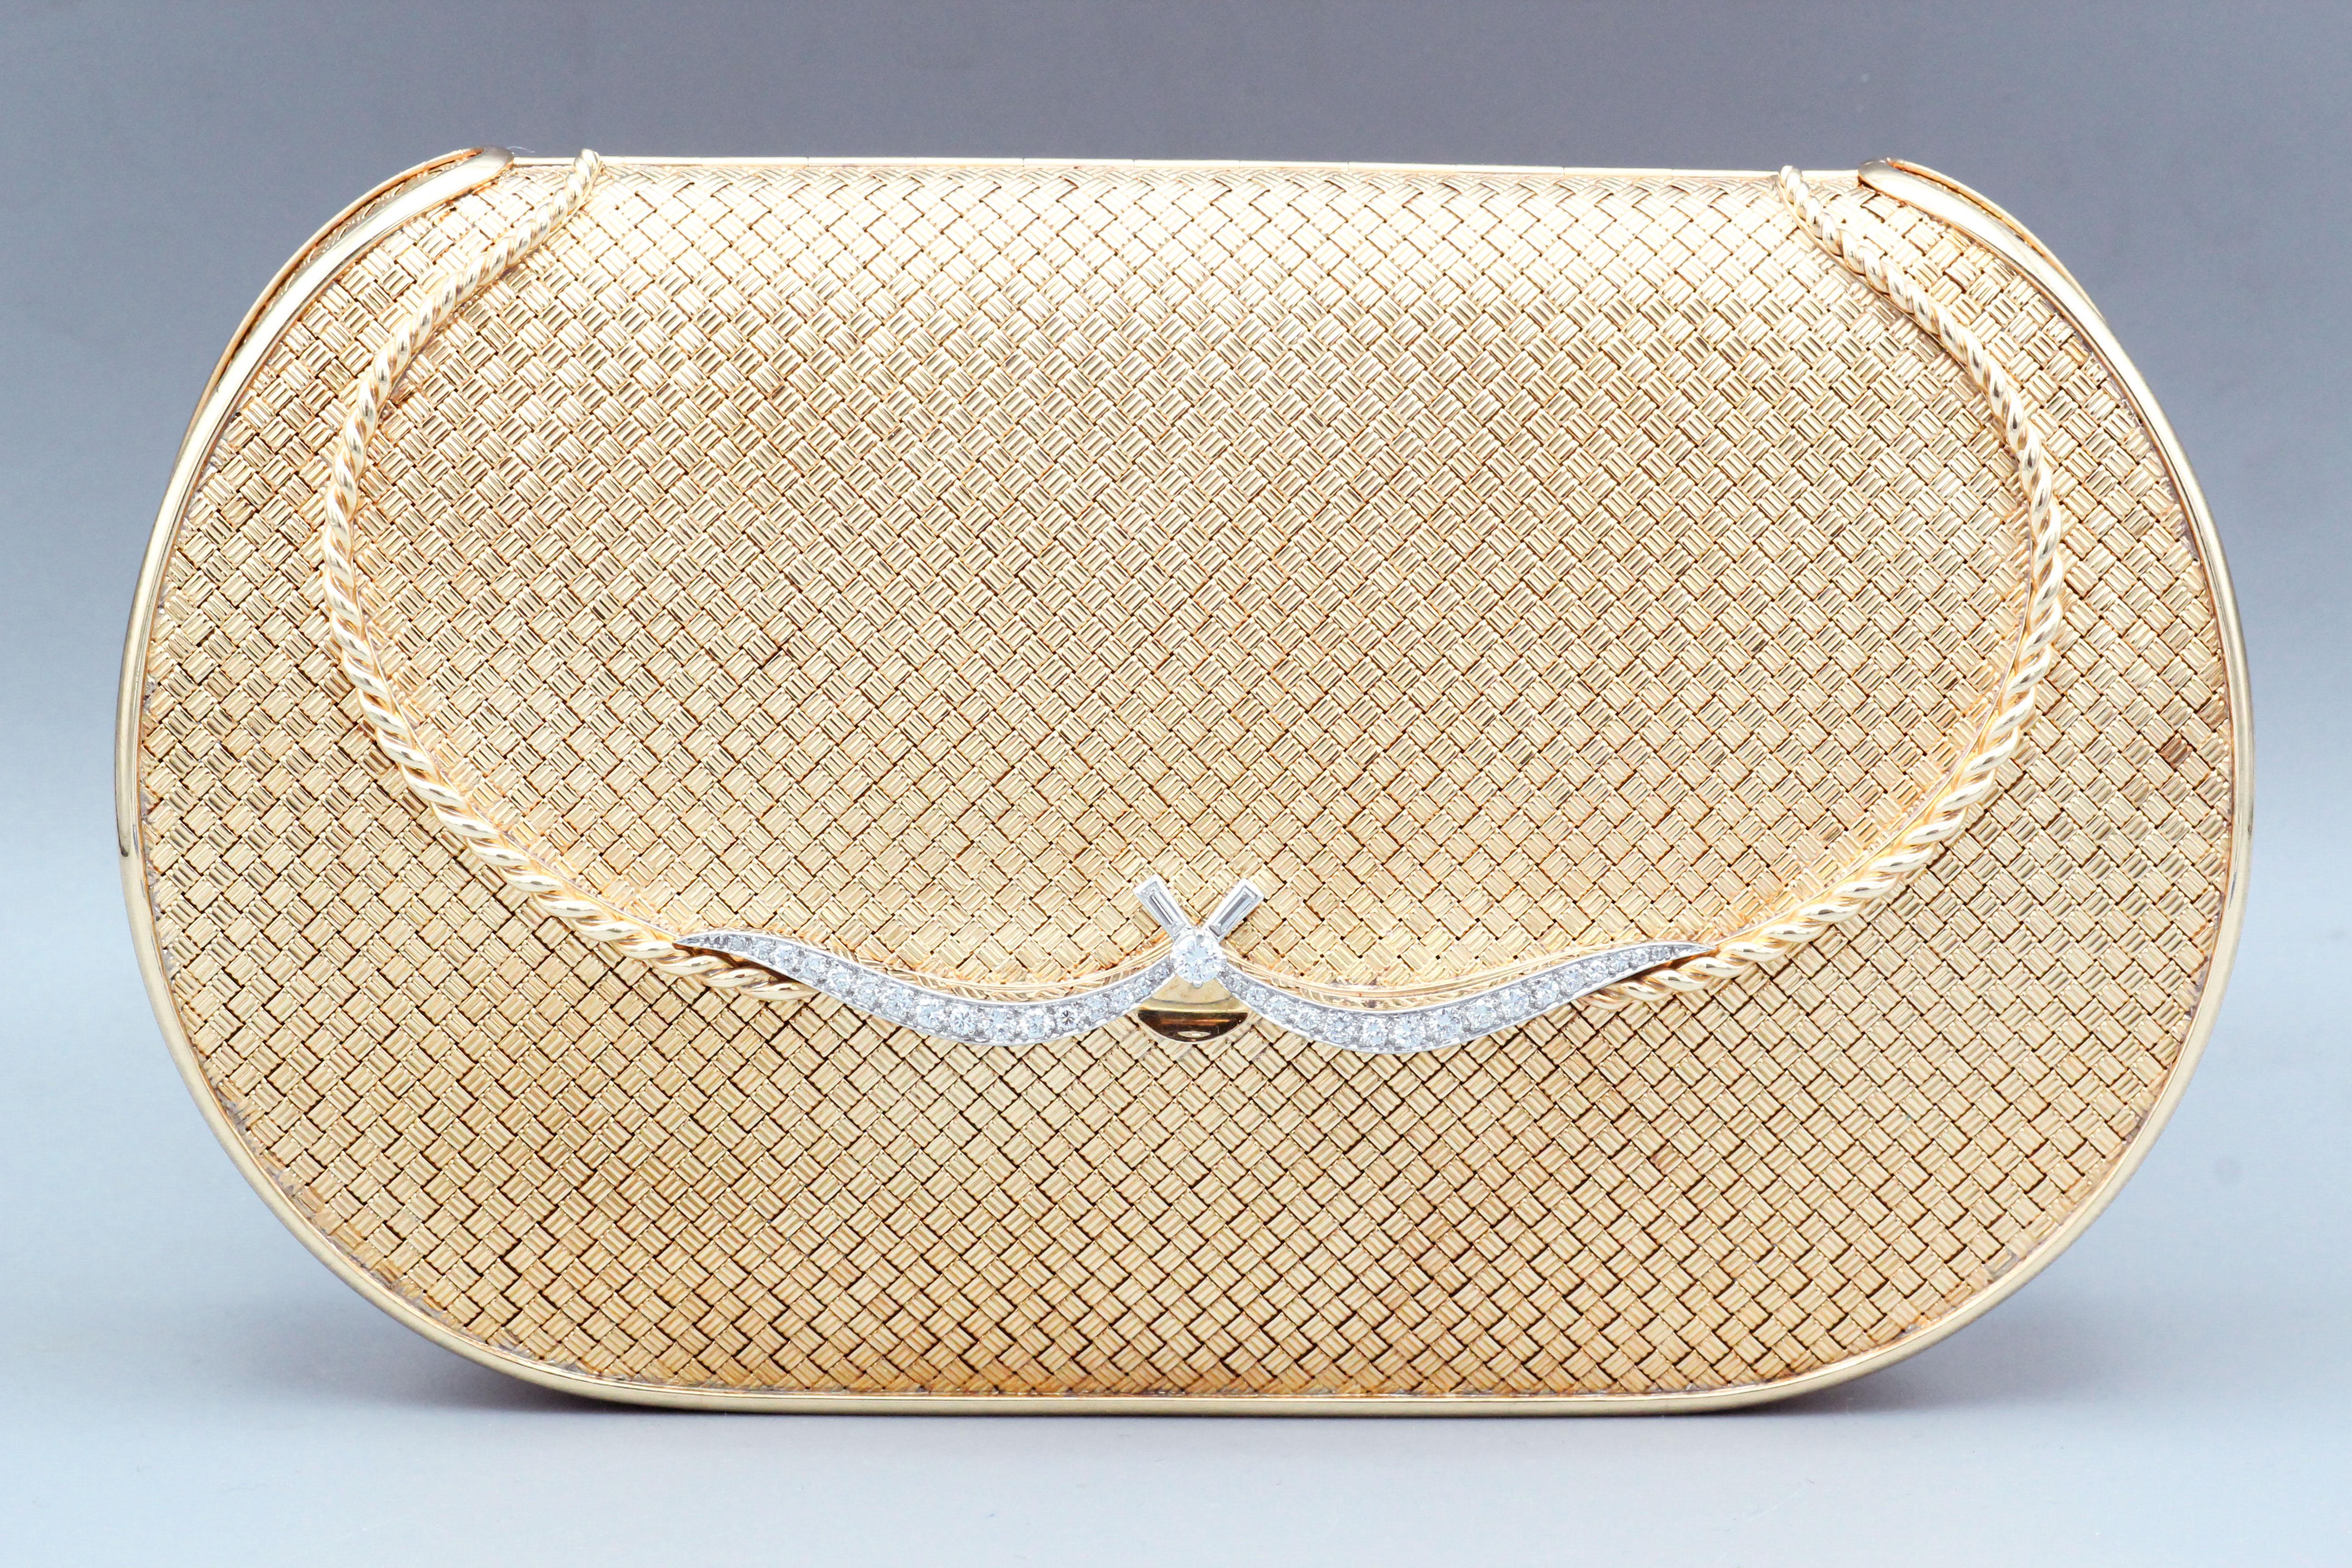 Brilliant Cut Vintage French-Made Diamond Platinum 18k Gold Basket Weave Clutch Purse For Sale